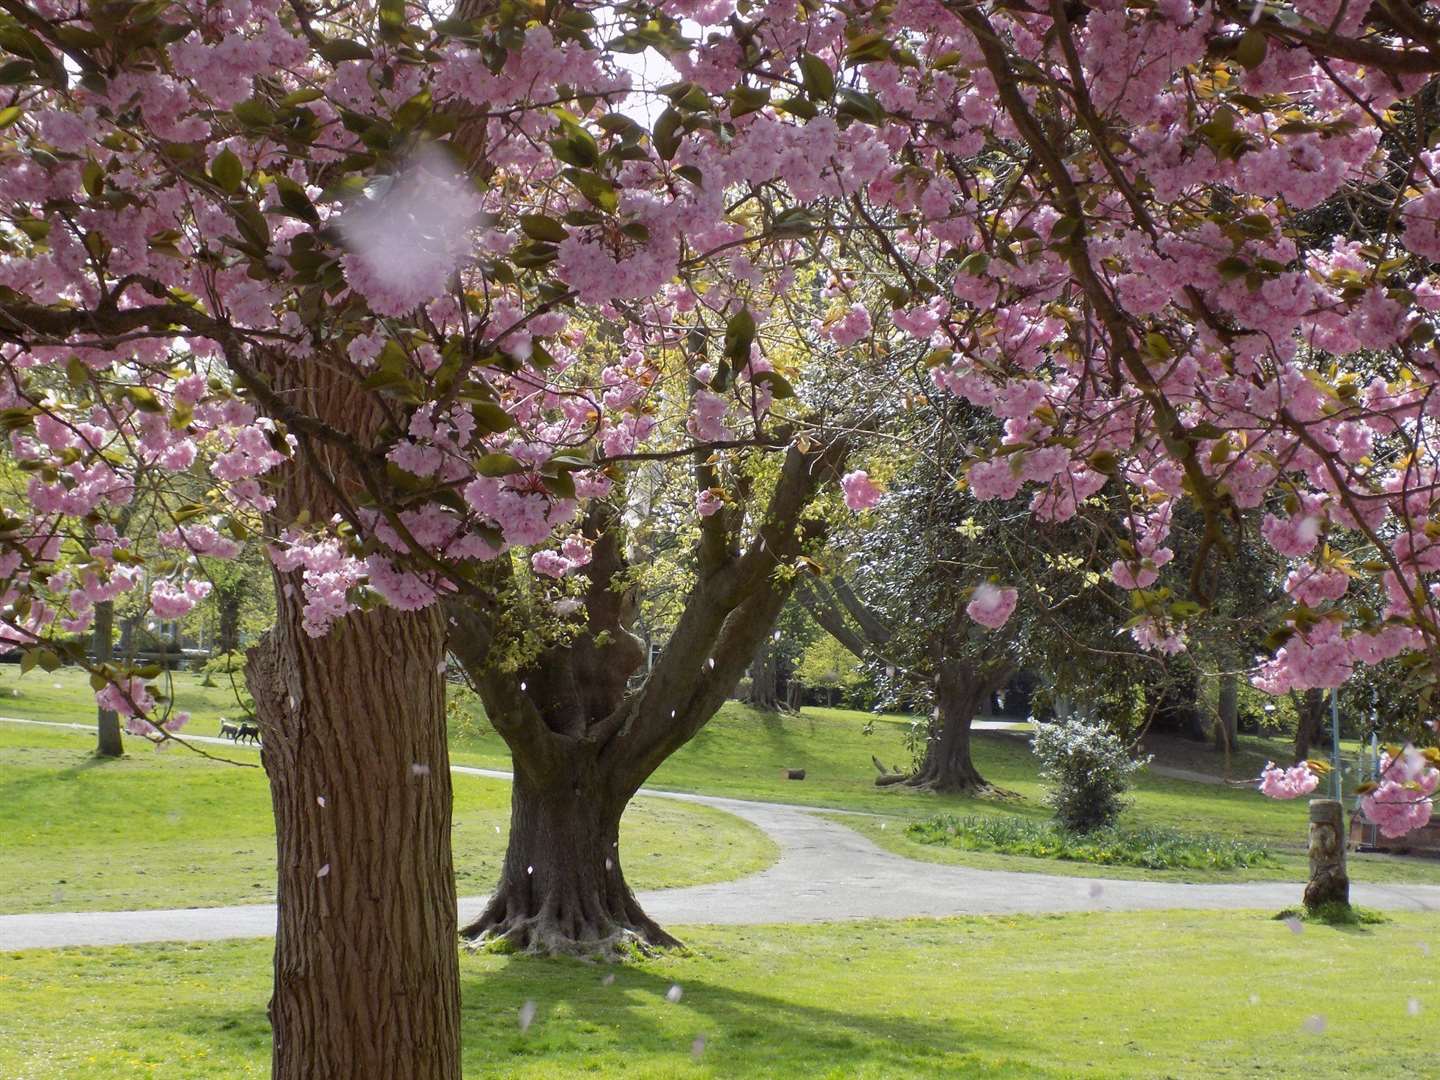 The cherry trees in Ellington Park